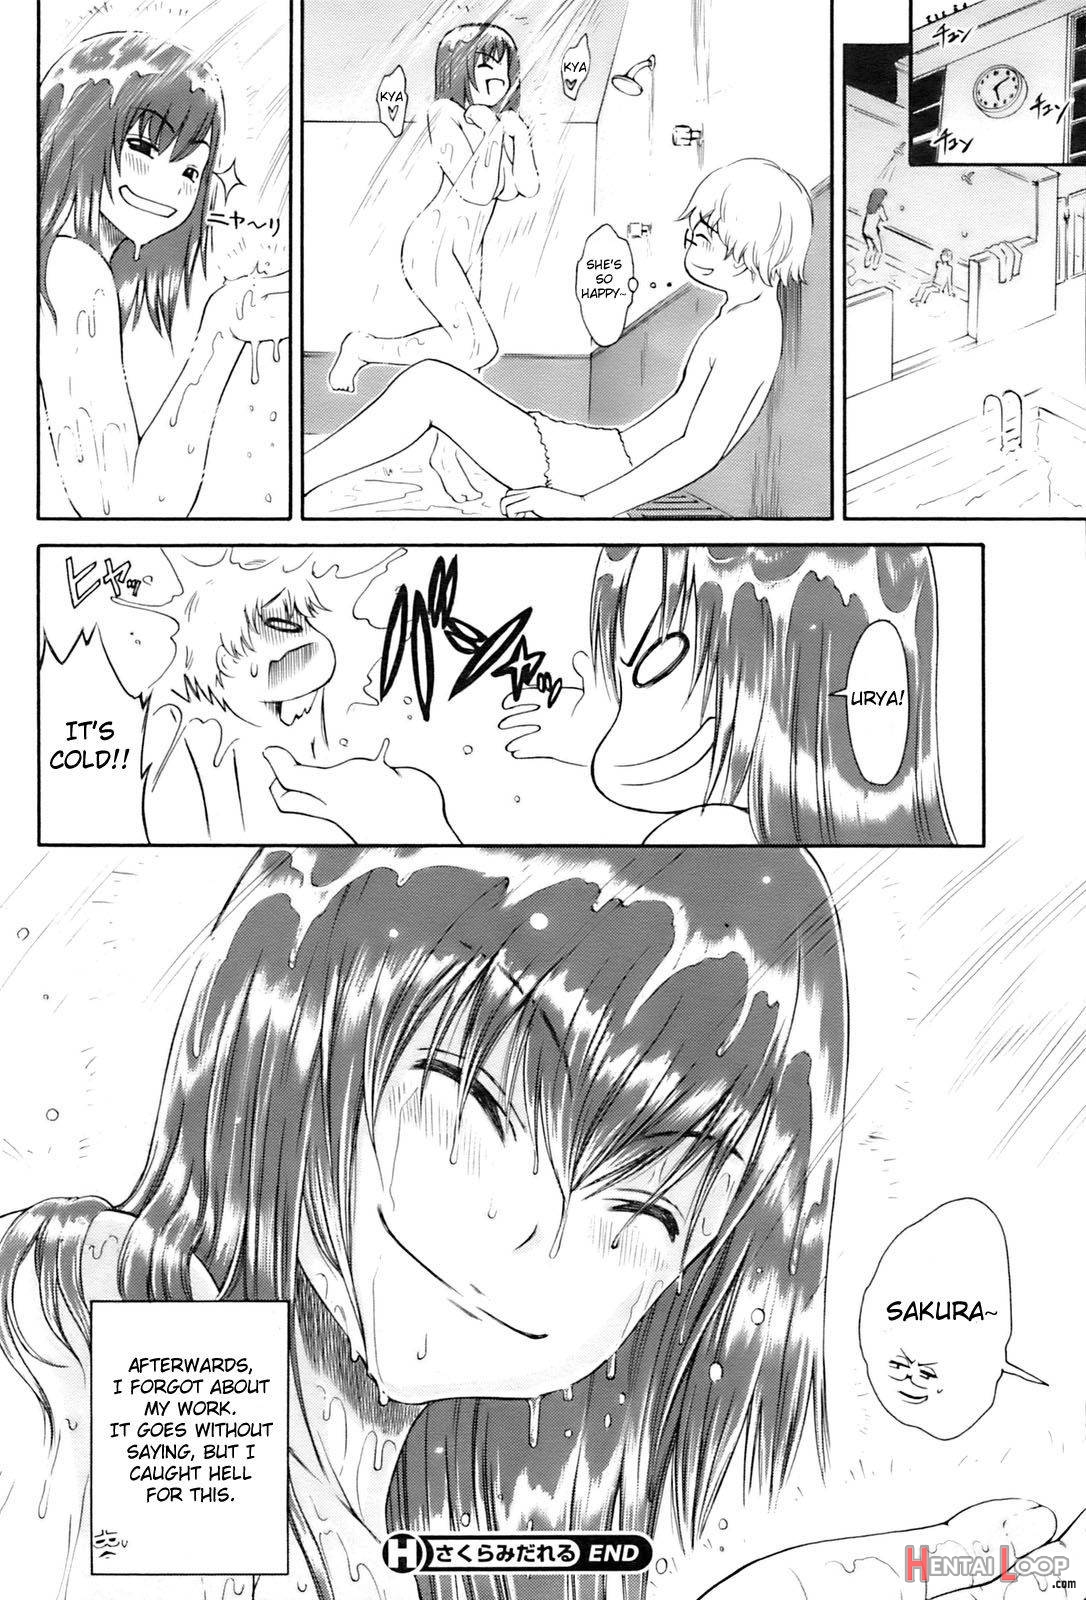 Sakura Midareru page 21